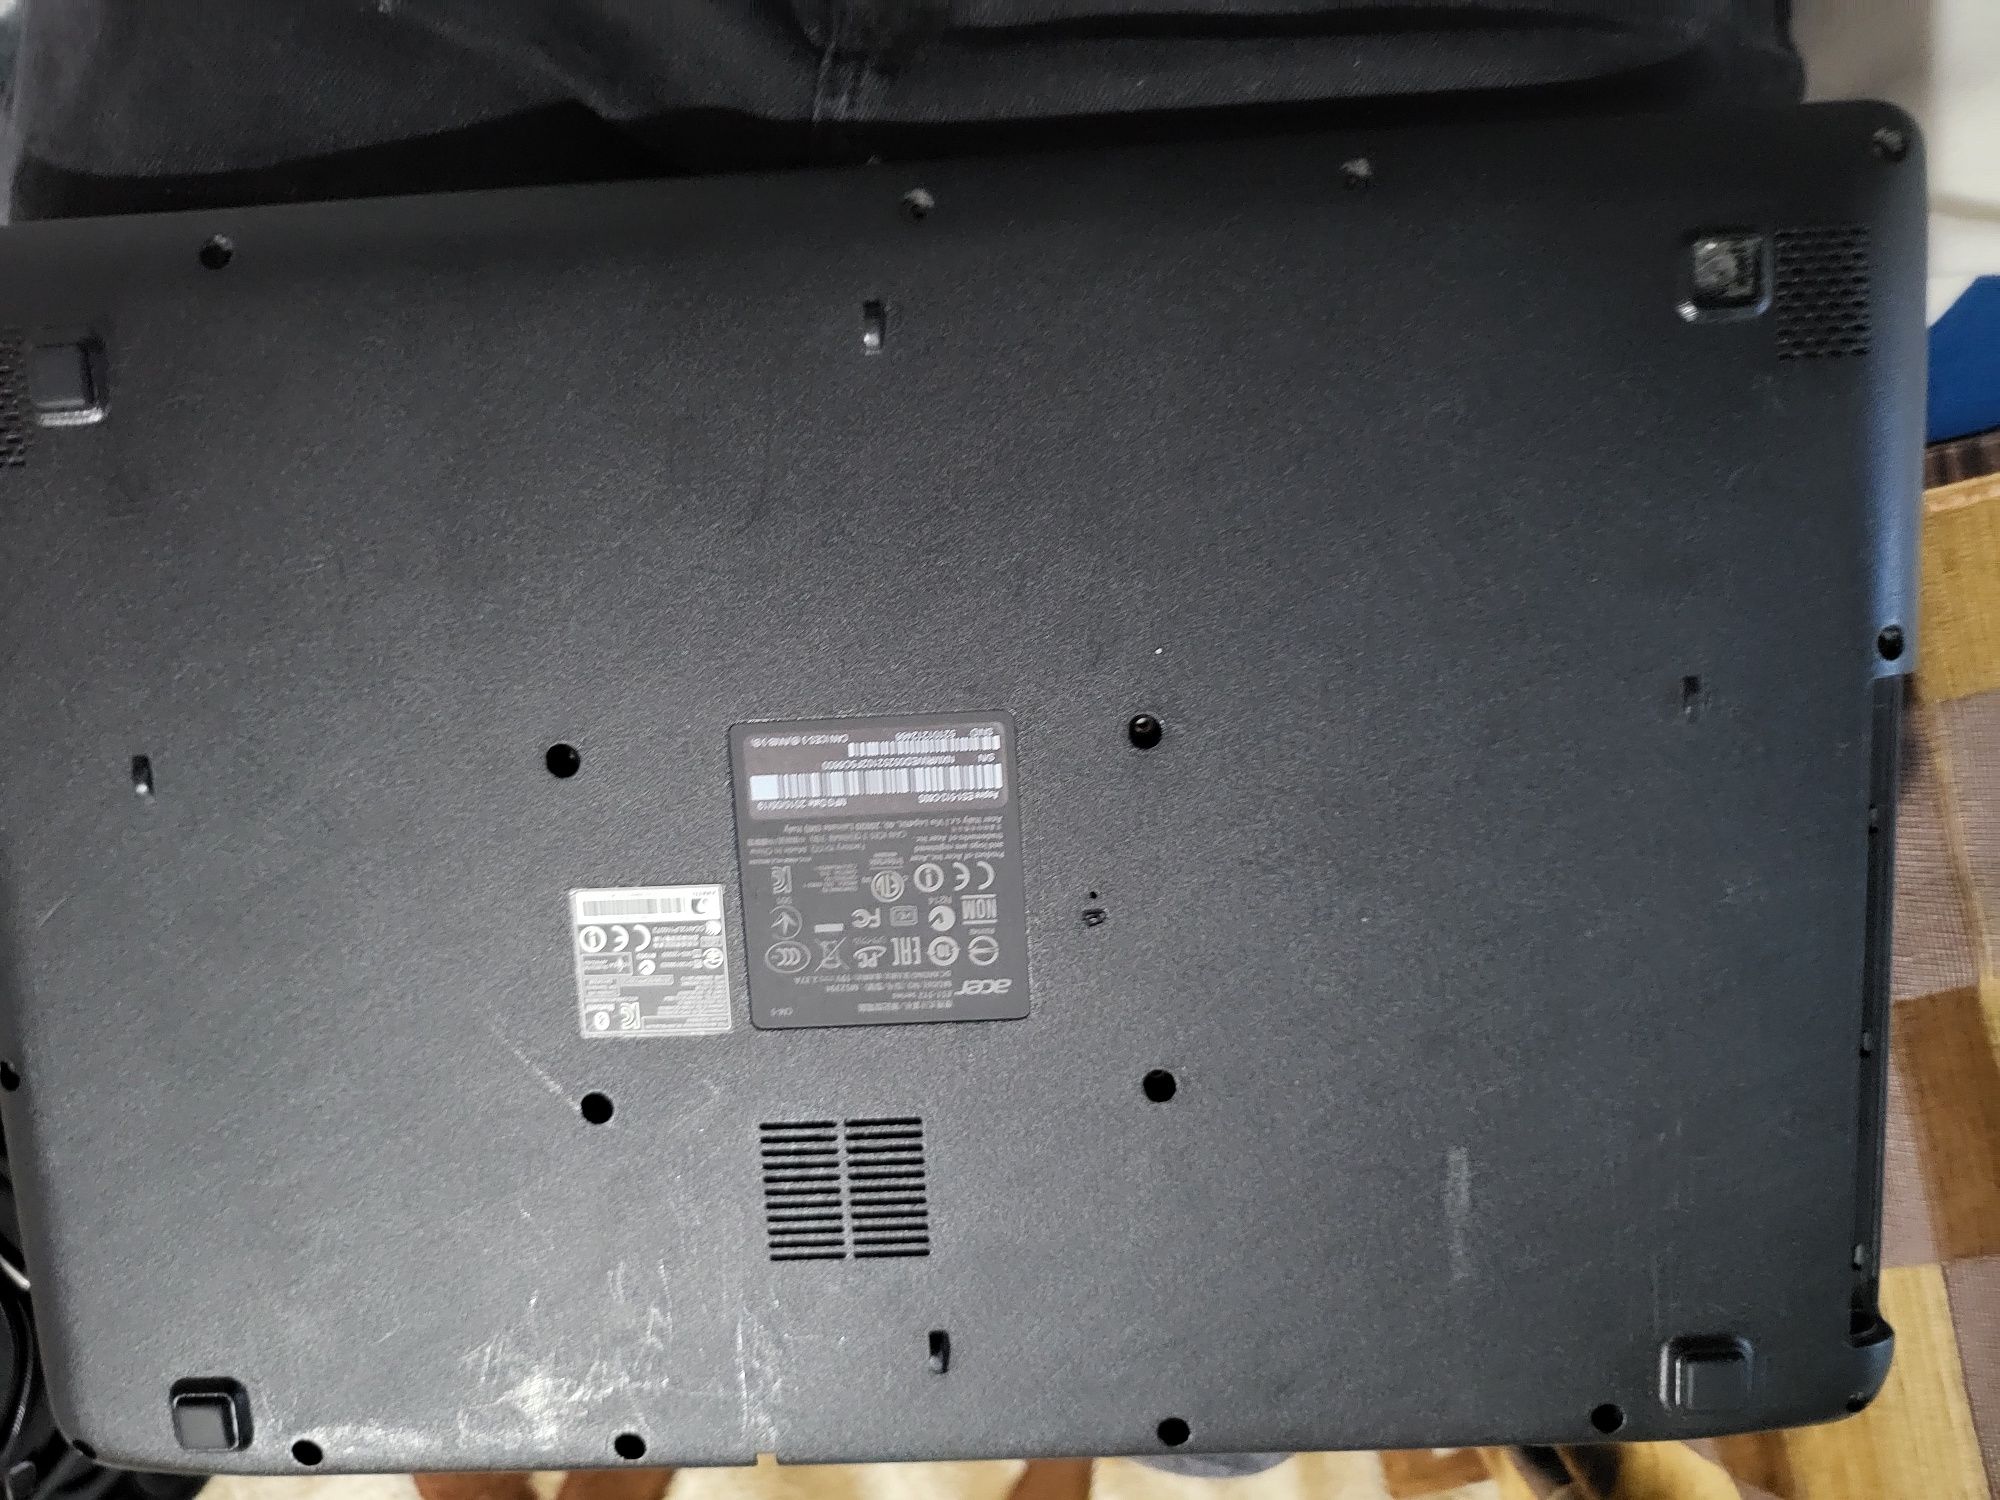 Dezmembrez laptop Acer ES1 512, componente